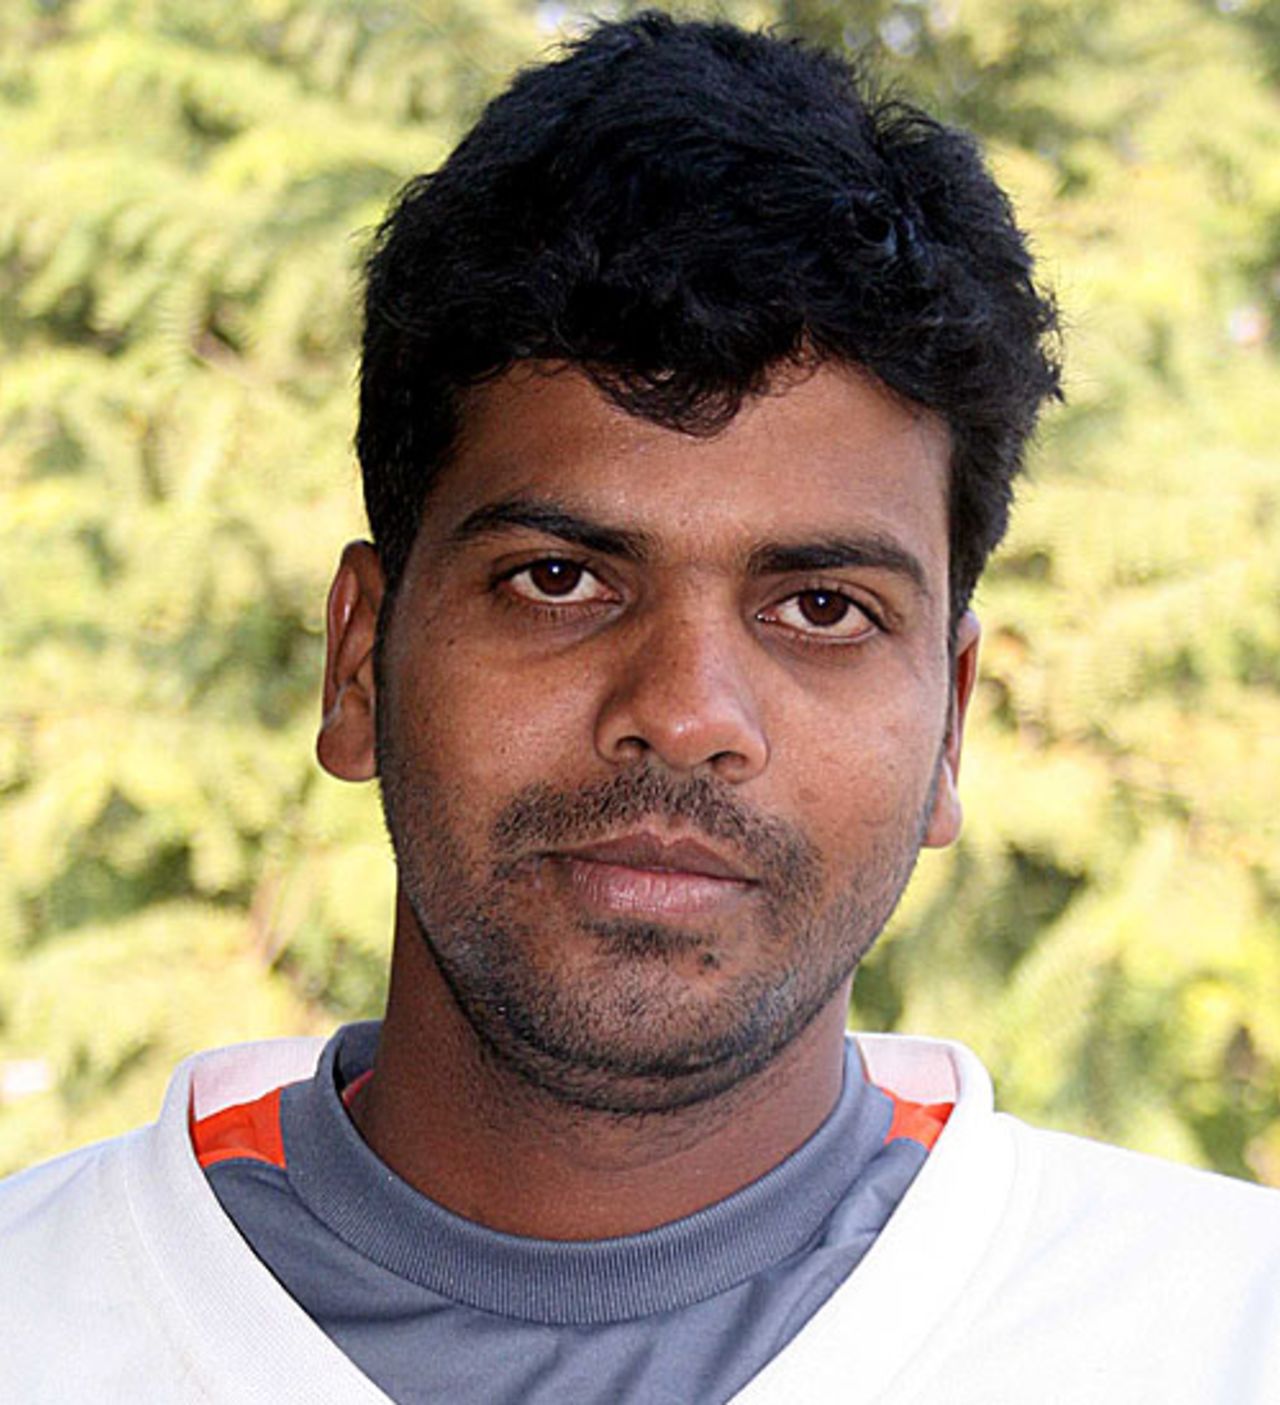 Rakesh Mohanty, player portrait, December 2009